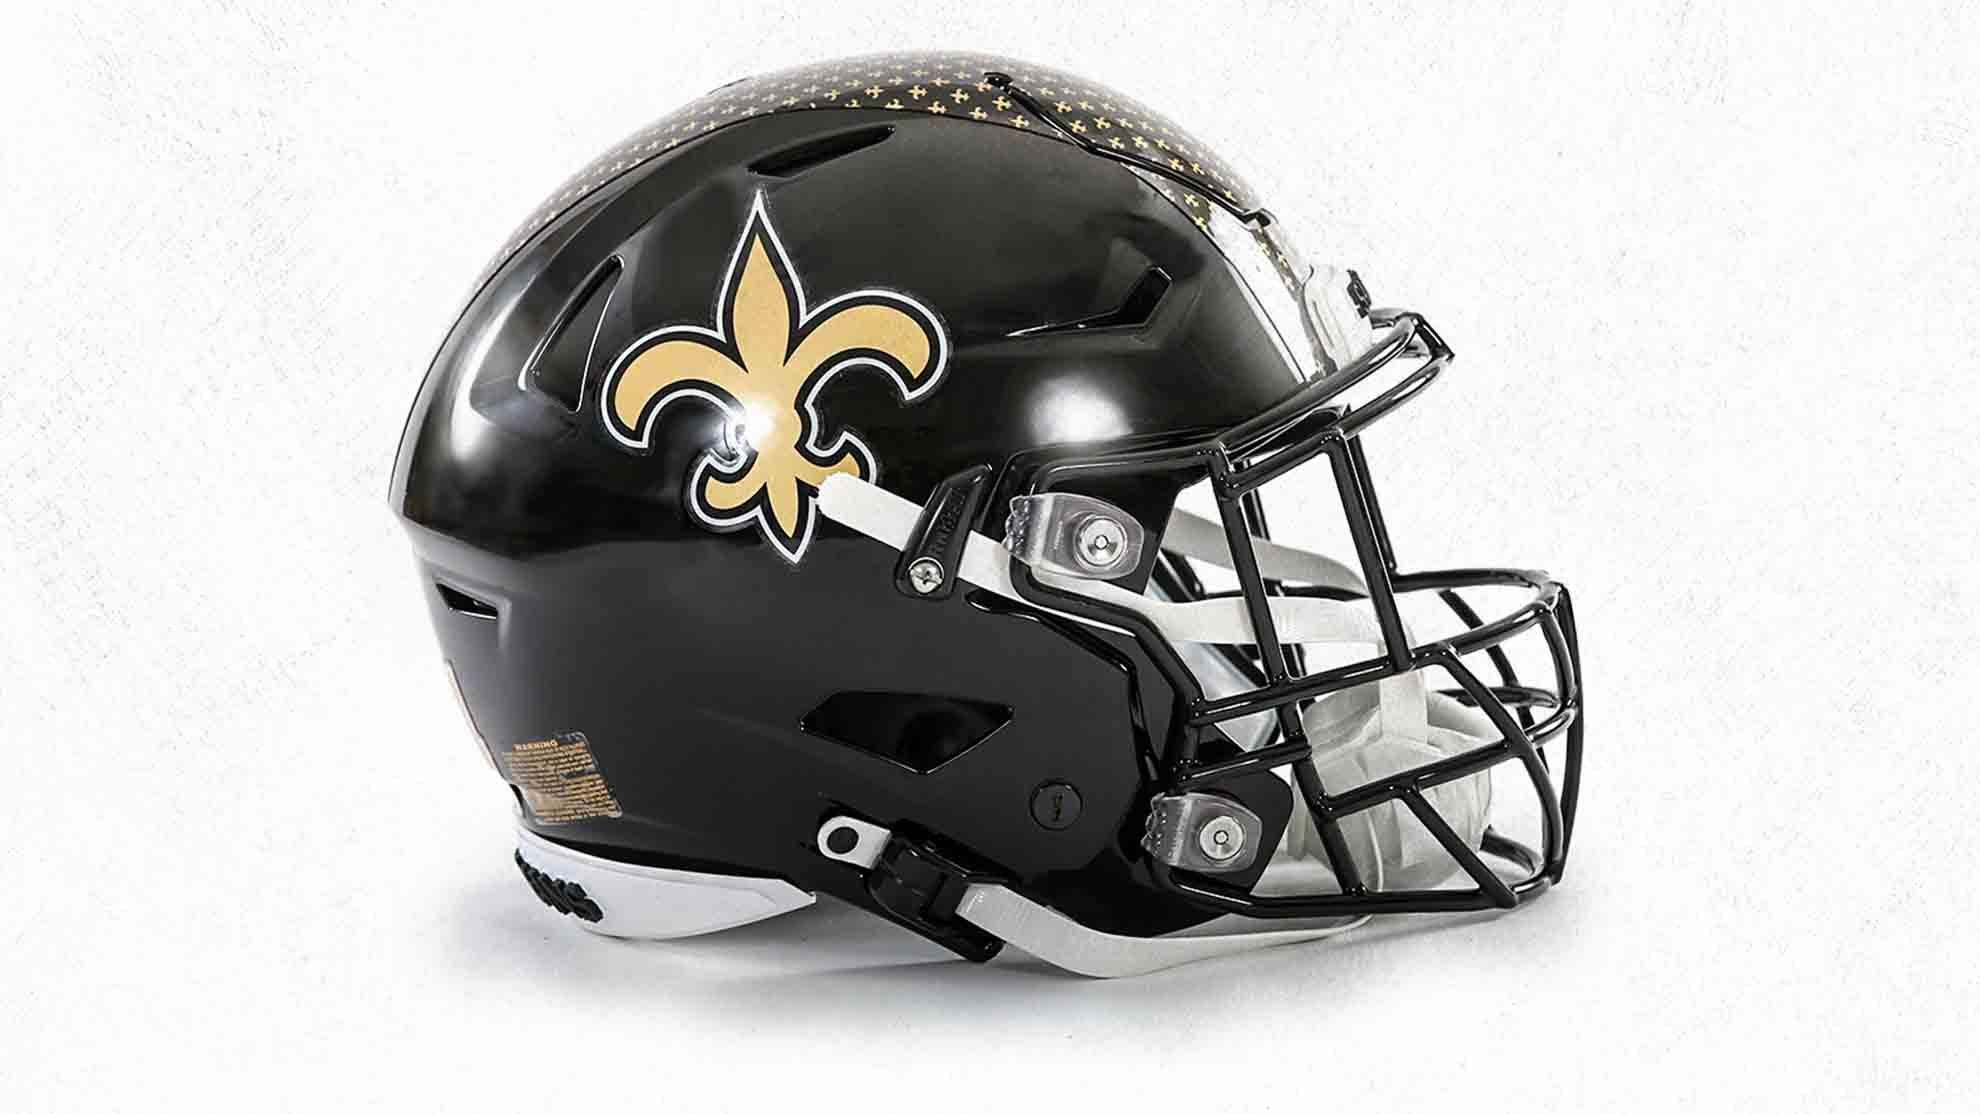 Eagles, Jets, Bengals unveil alternate helmets - The Athletic